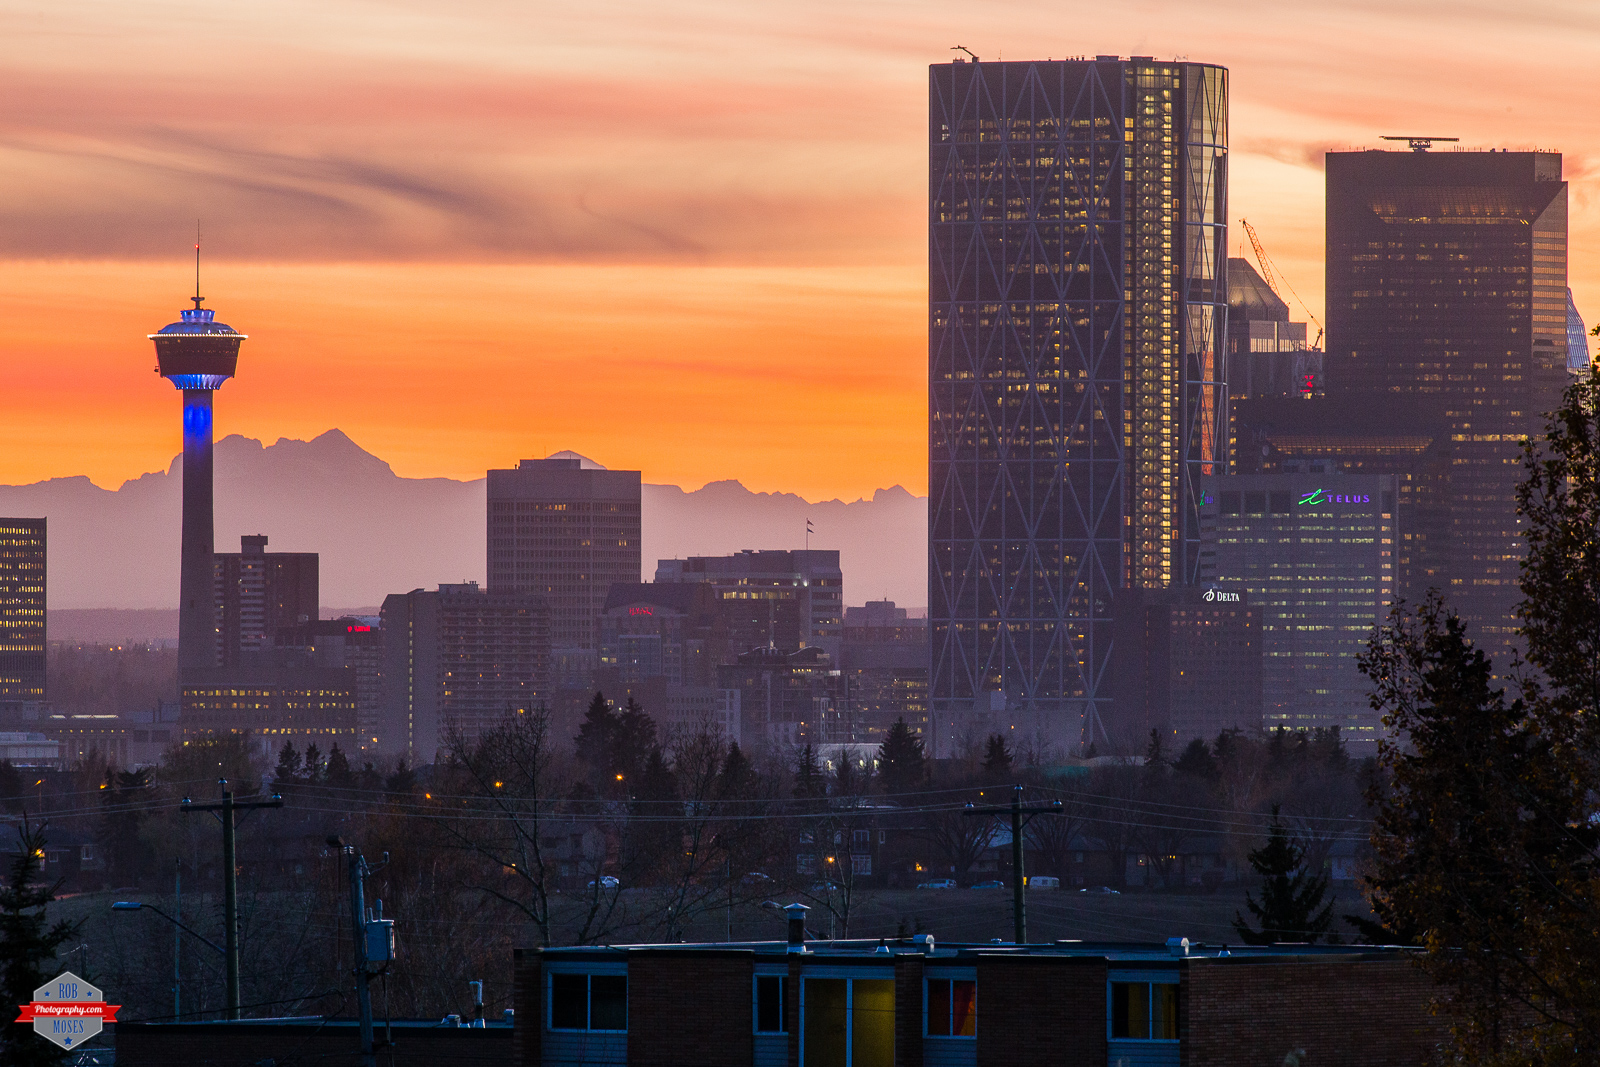 Calgary skyline at sunset with the Calgary tower